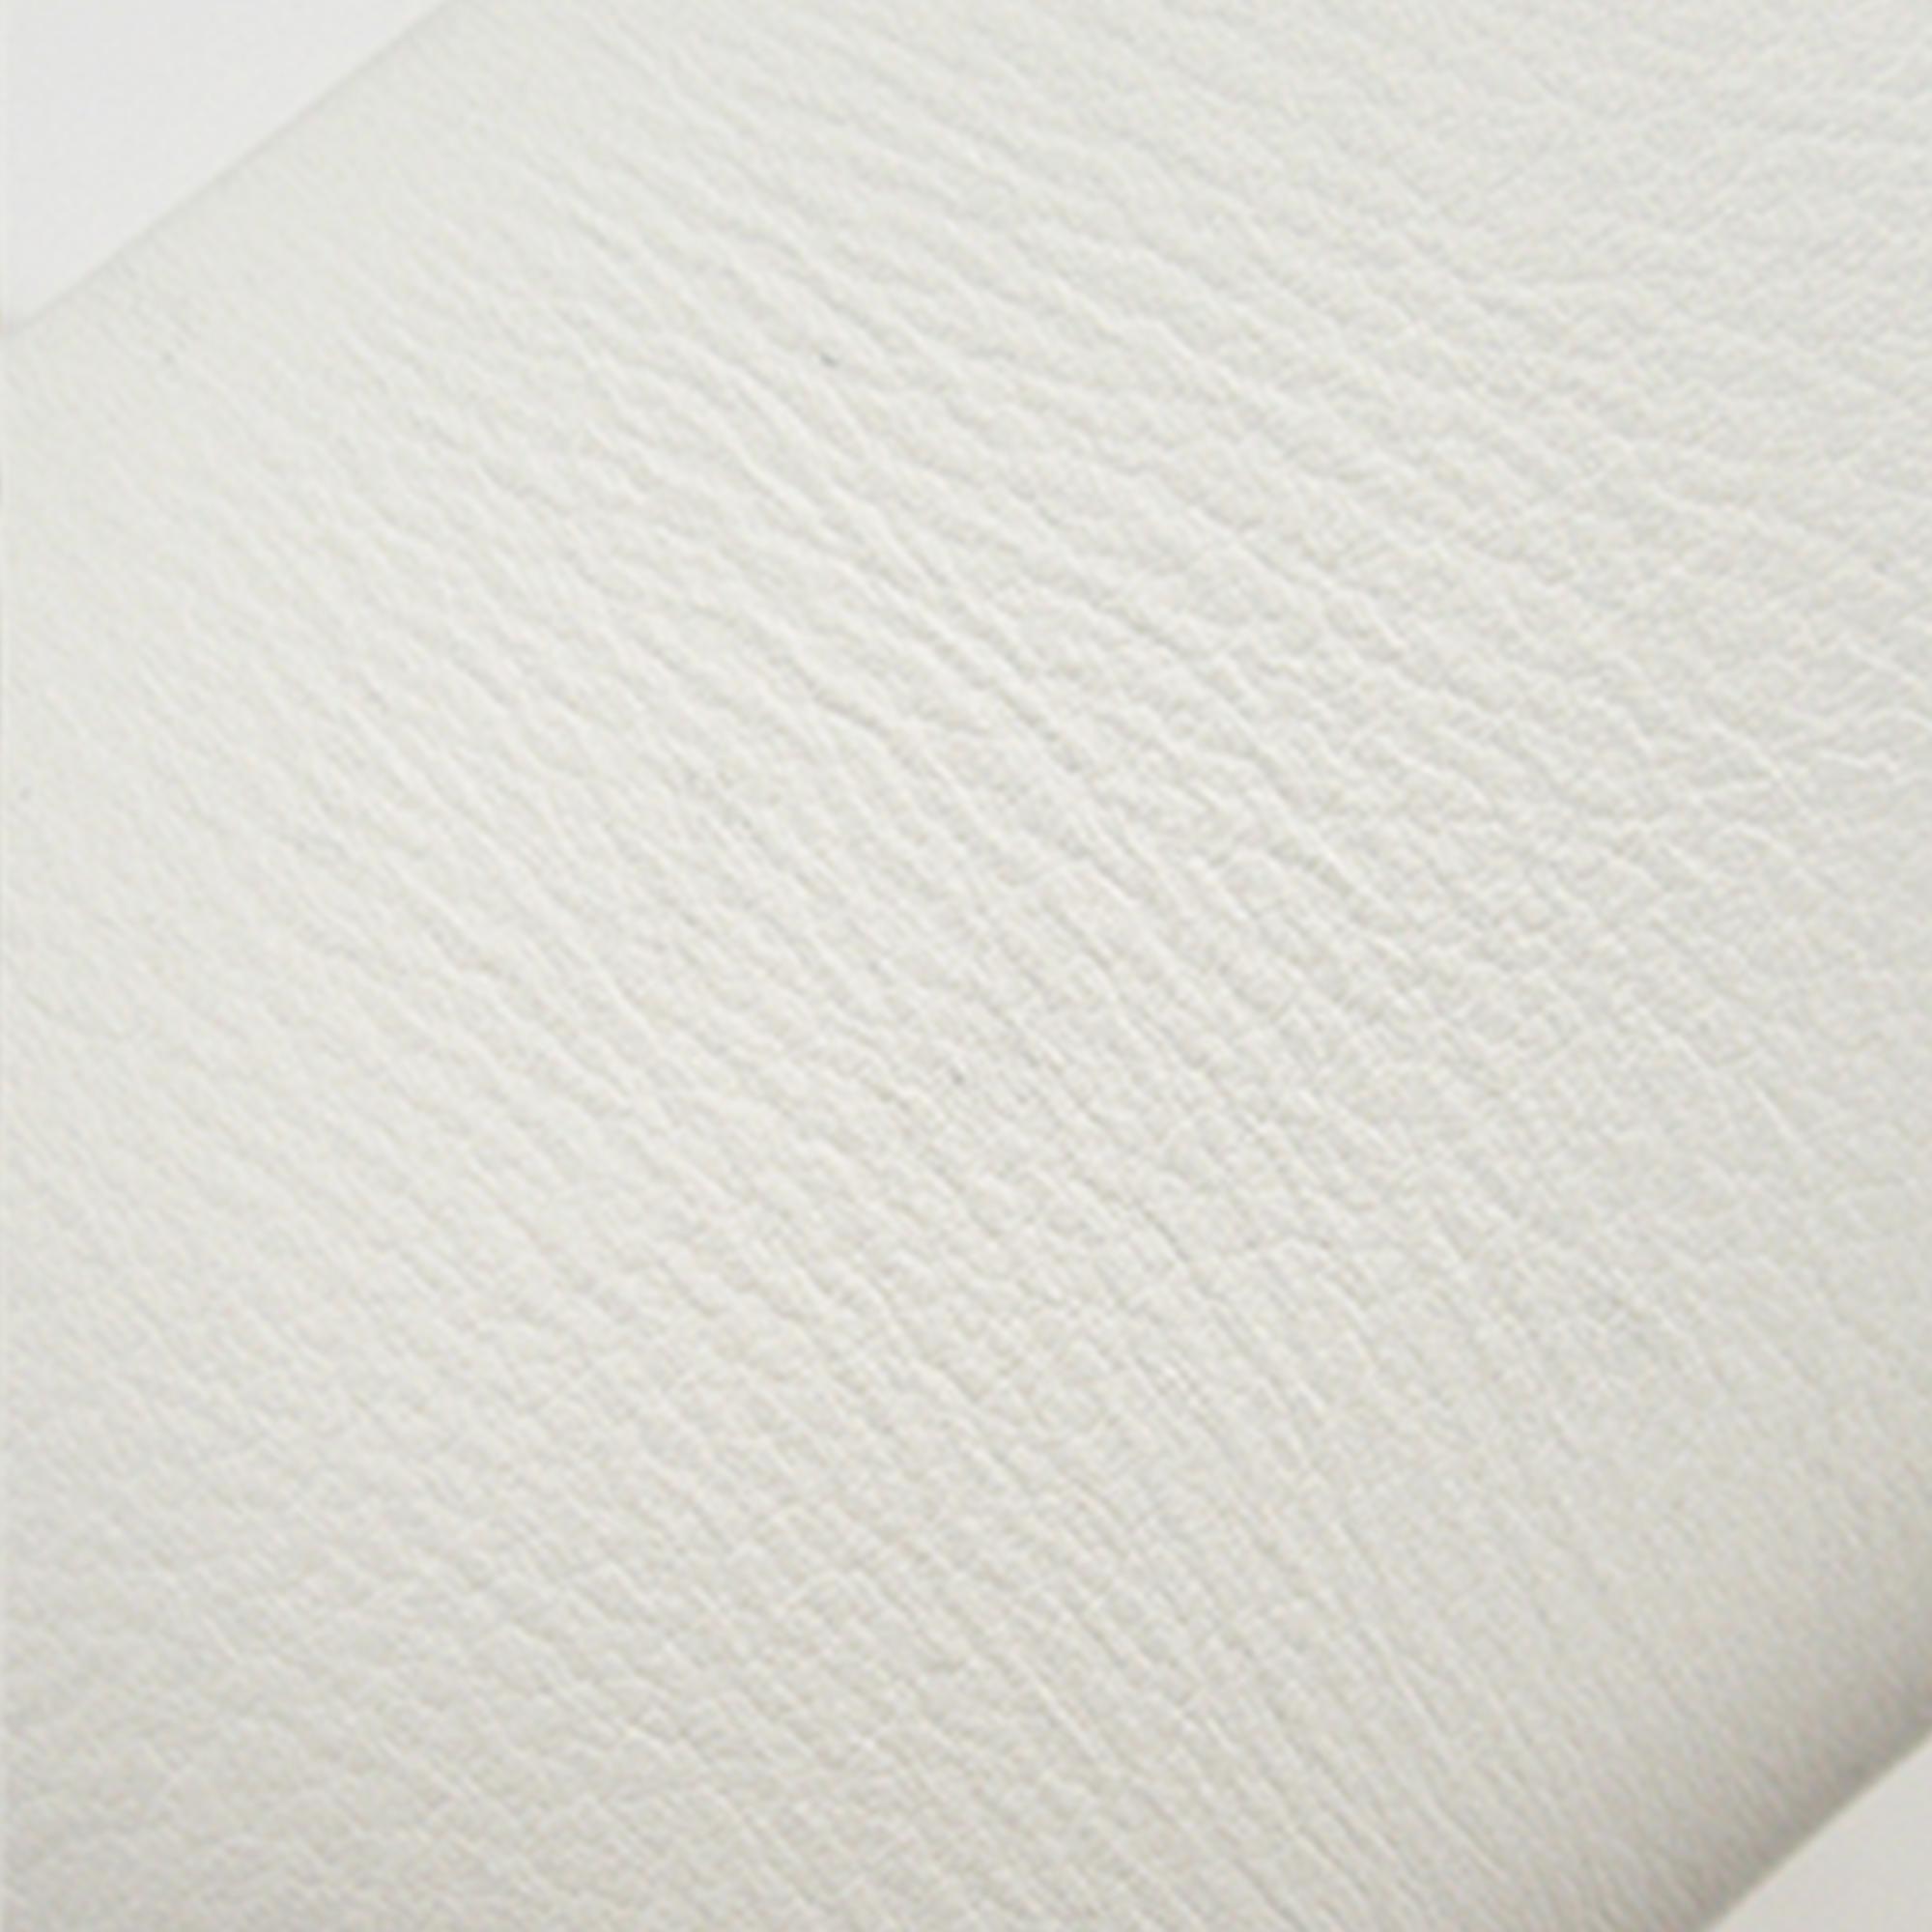 Louis Vuitton White New Wave Chain Bag MM